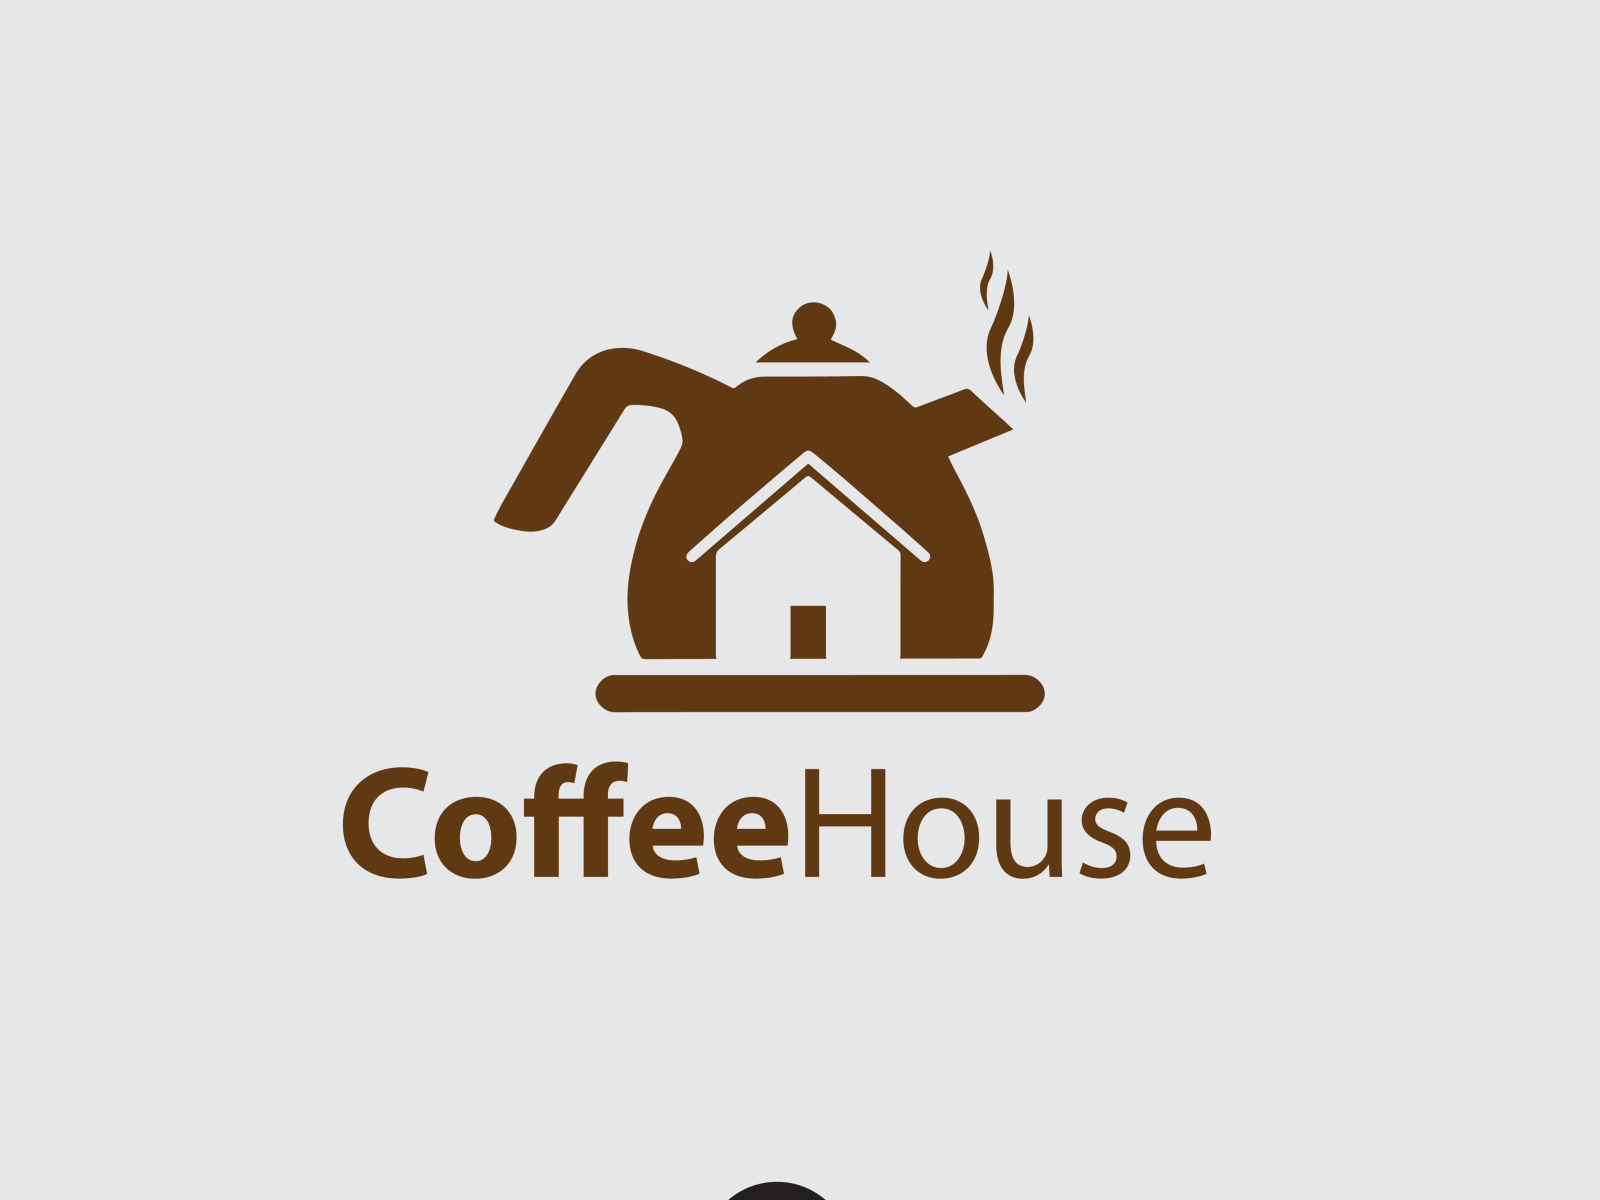 Coffee House Logo Design by zaqilogo on Dribbble